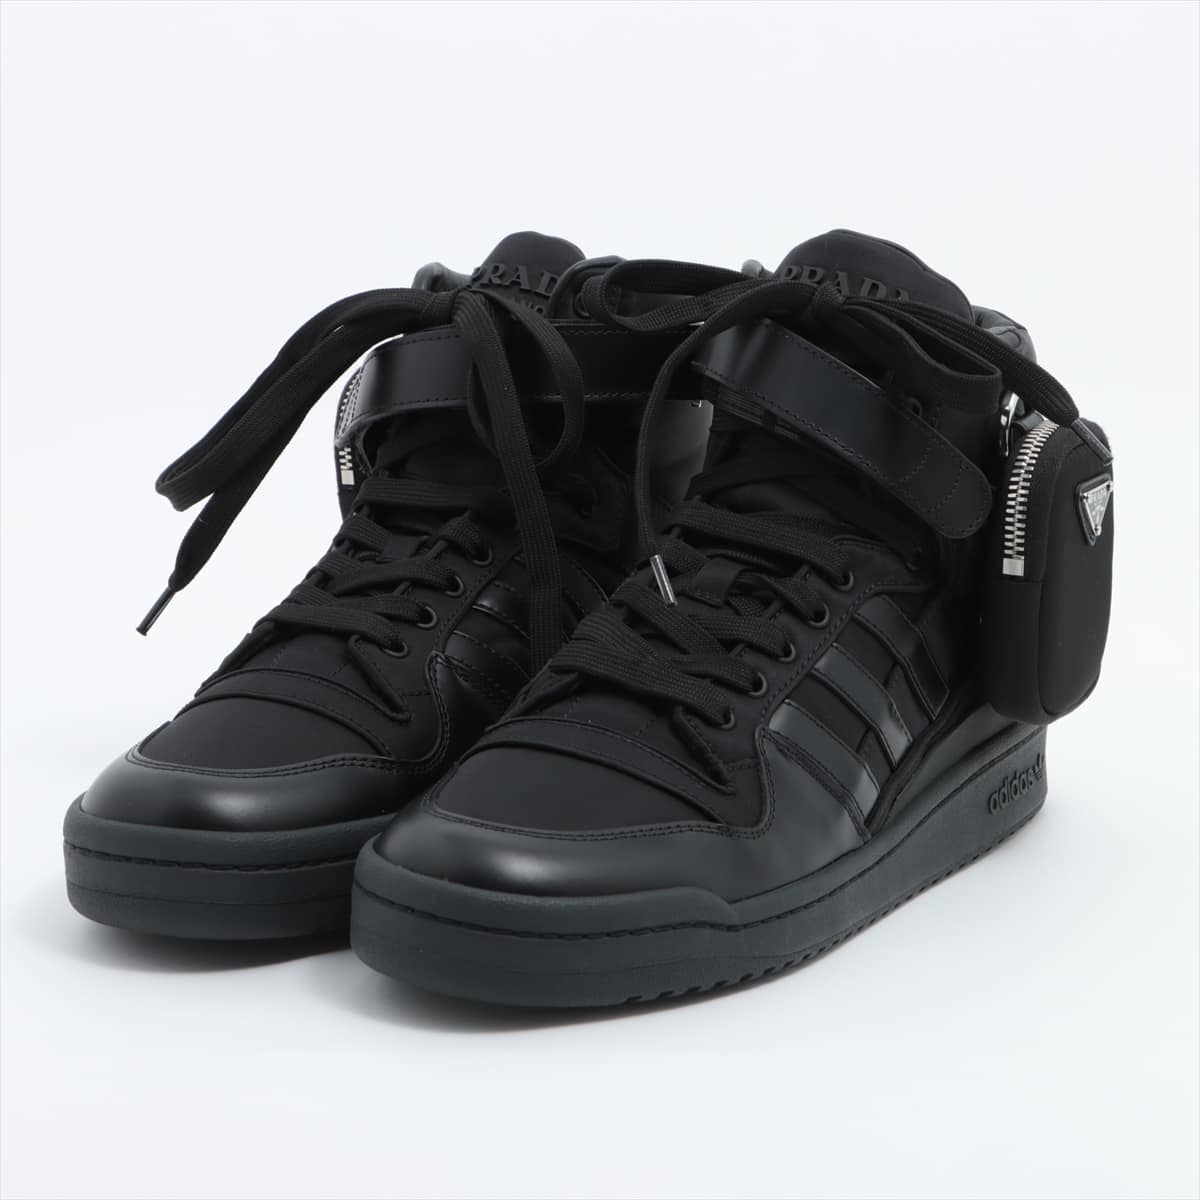 Prada x Adidas Nylon & Leather High-top Sneakers 26.5cm Men's Black Forum High Renylon 2TG193